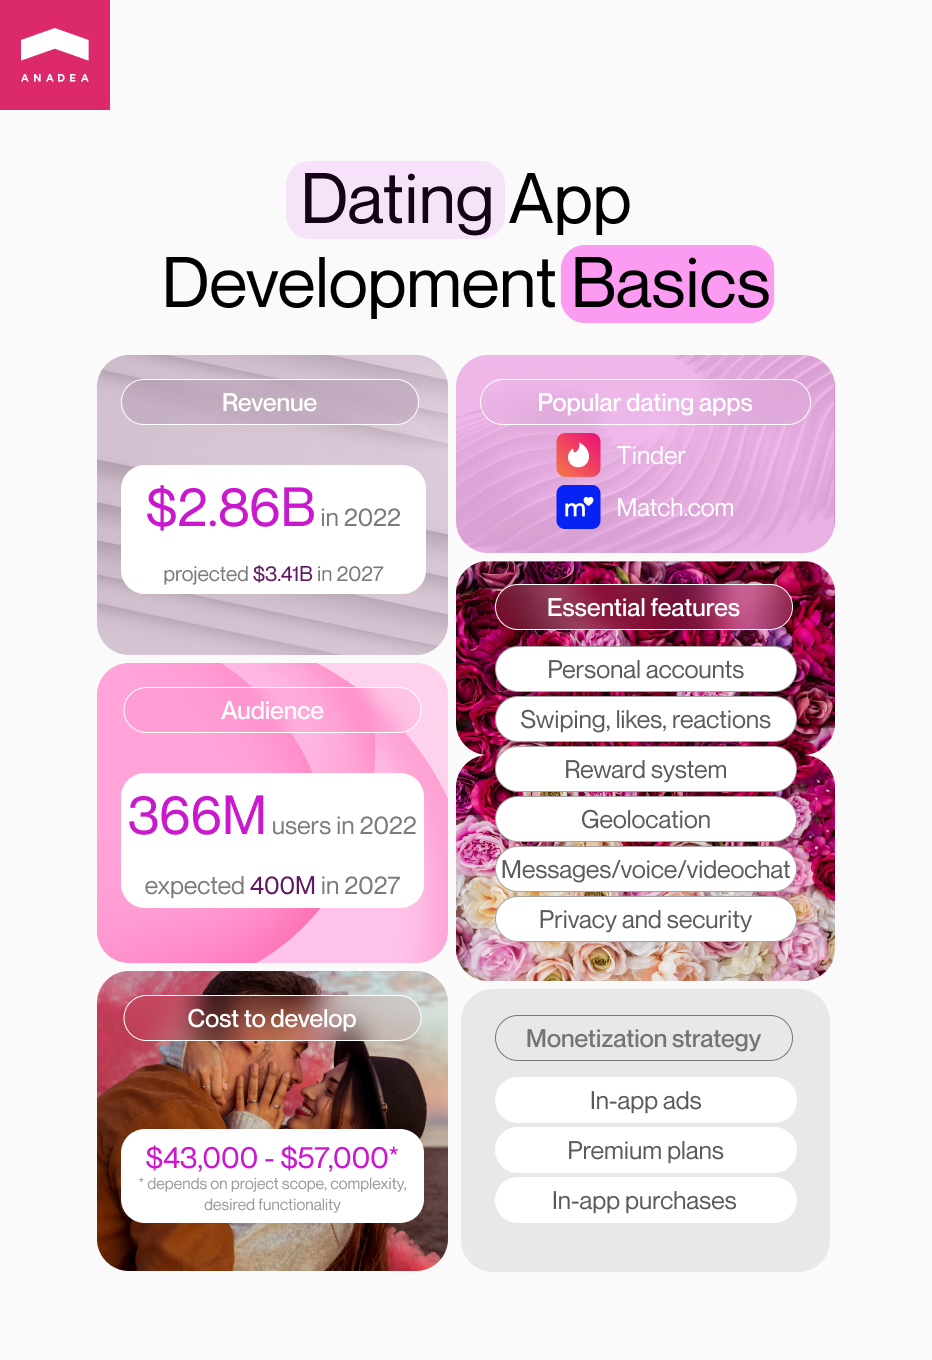 Dating app development infographic - Revenue, audience, monetization